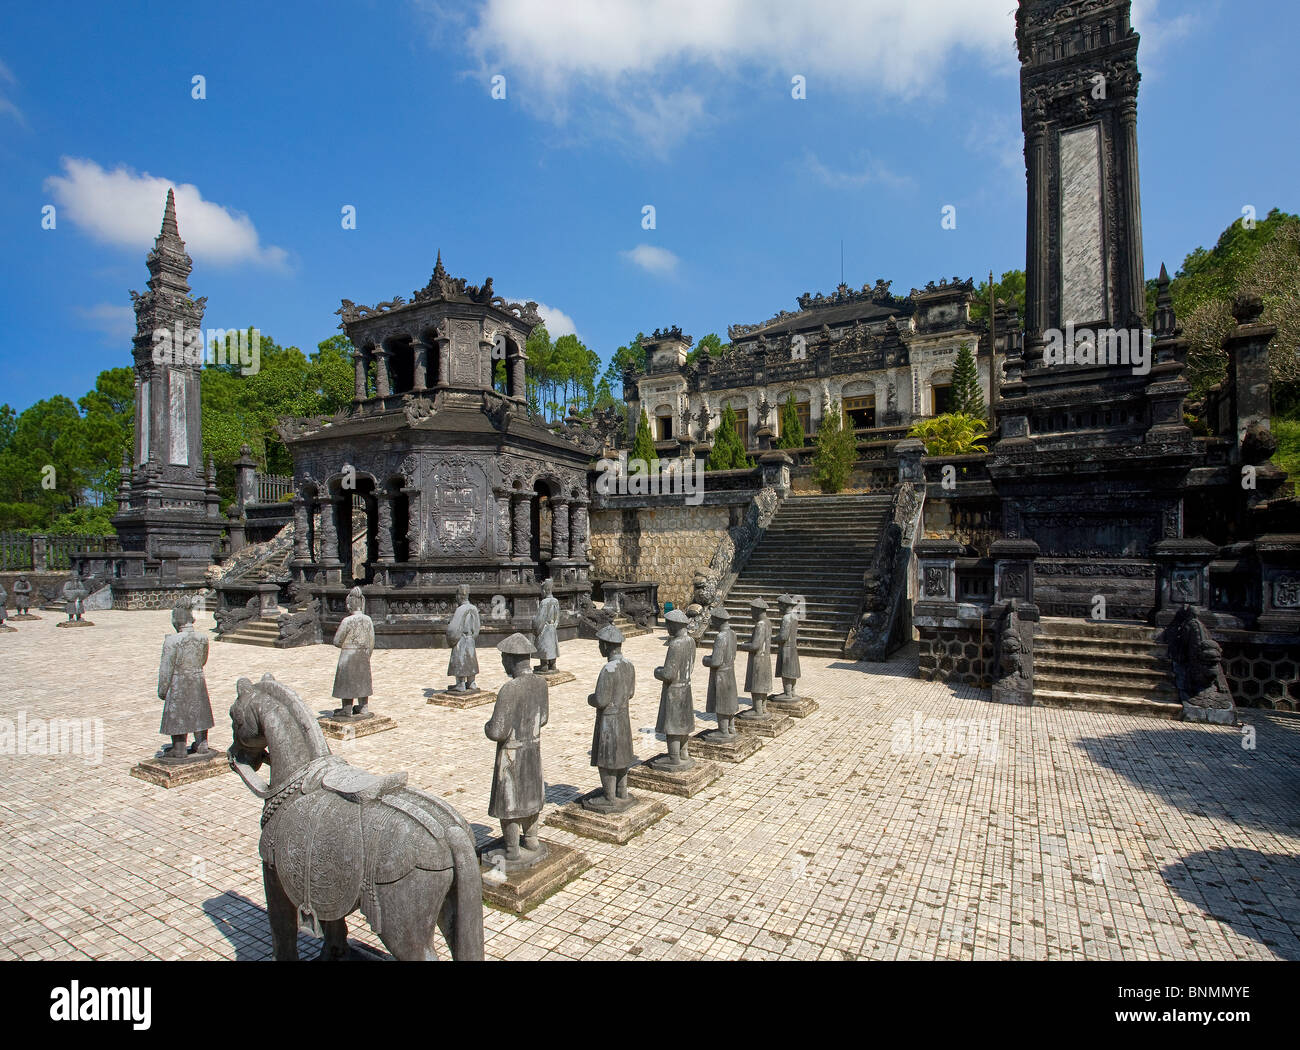 Vietnam Asia Far East Gee up mausoleum Khai Dinh figures stone figures travel place of interest landmark Stock Photo